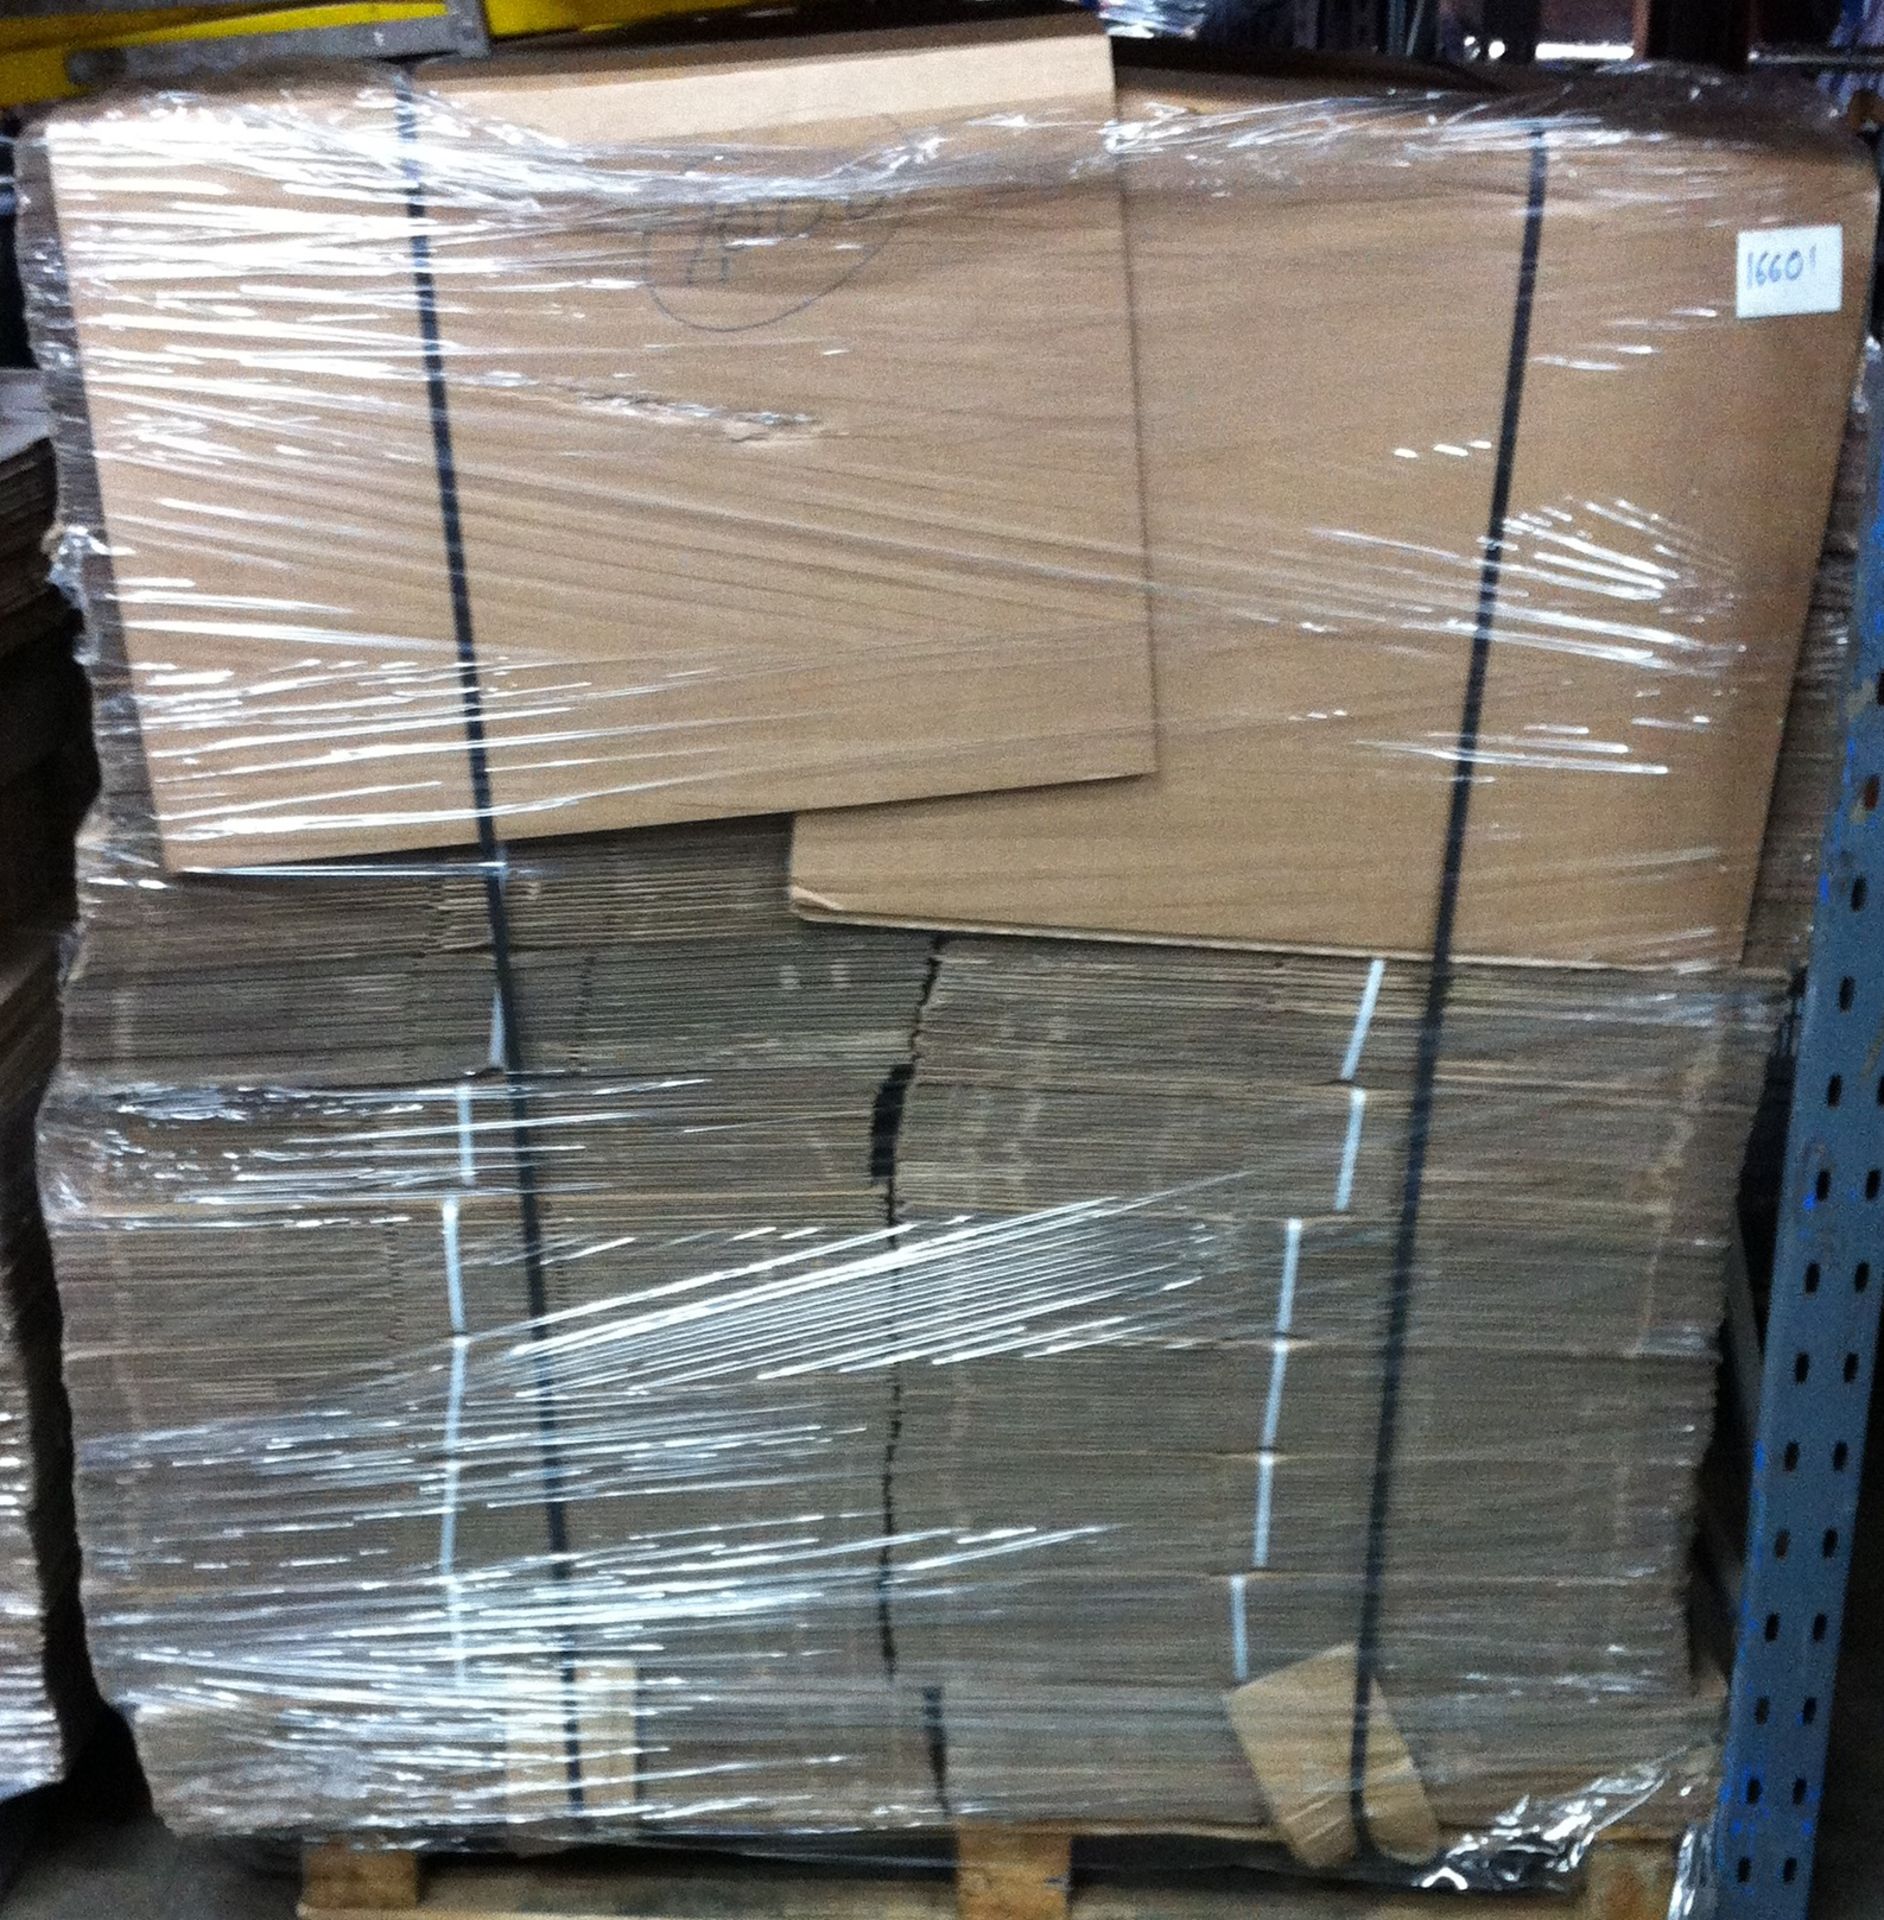 750 Cardboard boxes